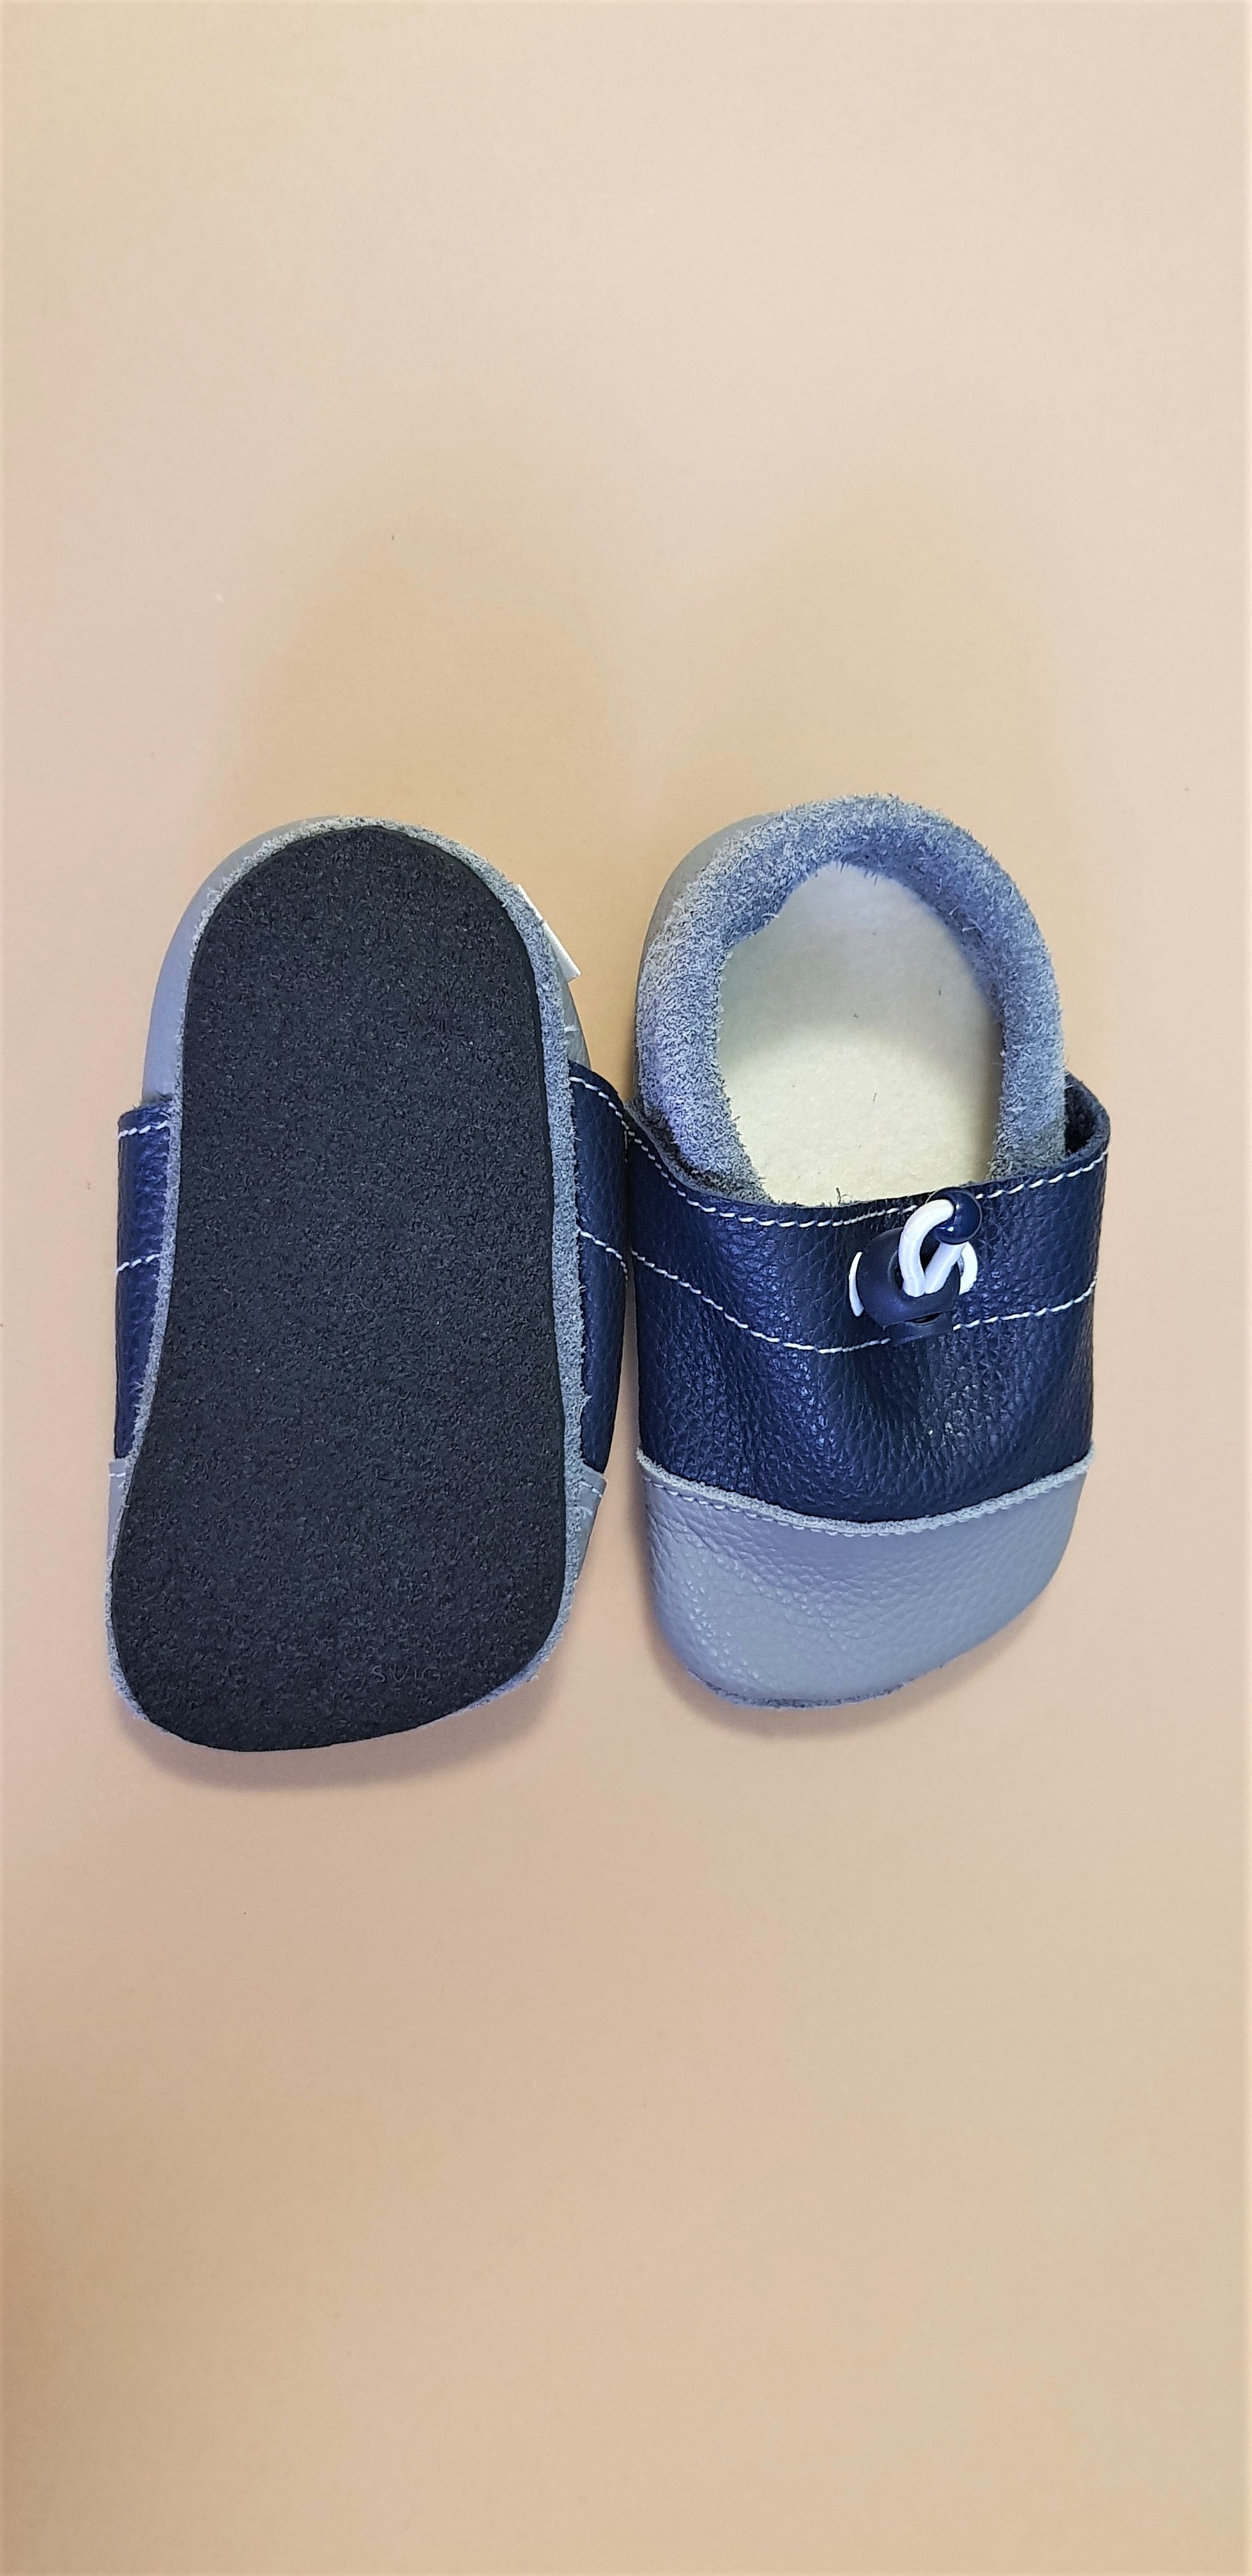 Indoor/Outdoor Soft Sole Slippers - Navy and Grey